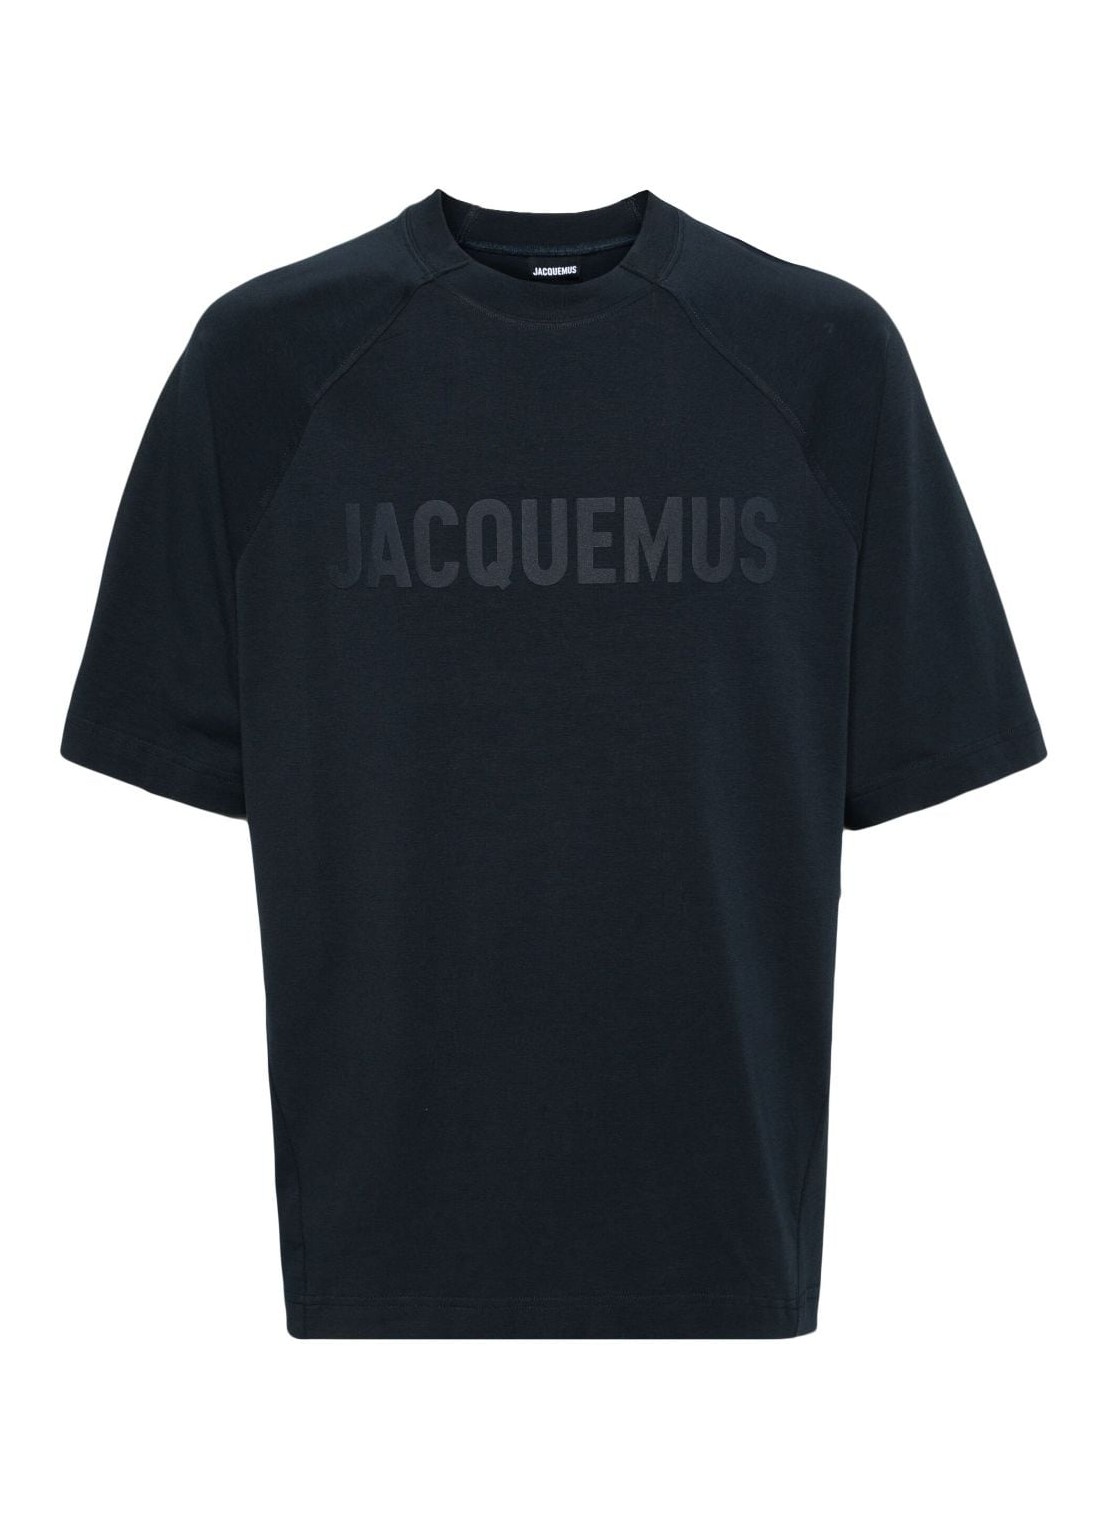 Camiseta jacquemus t-shirt man le tshirt typo 24e245js2122031 390 talla M
 